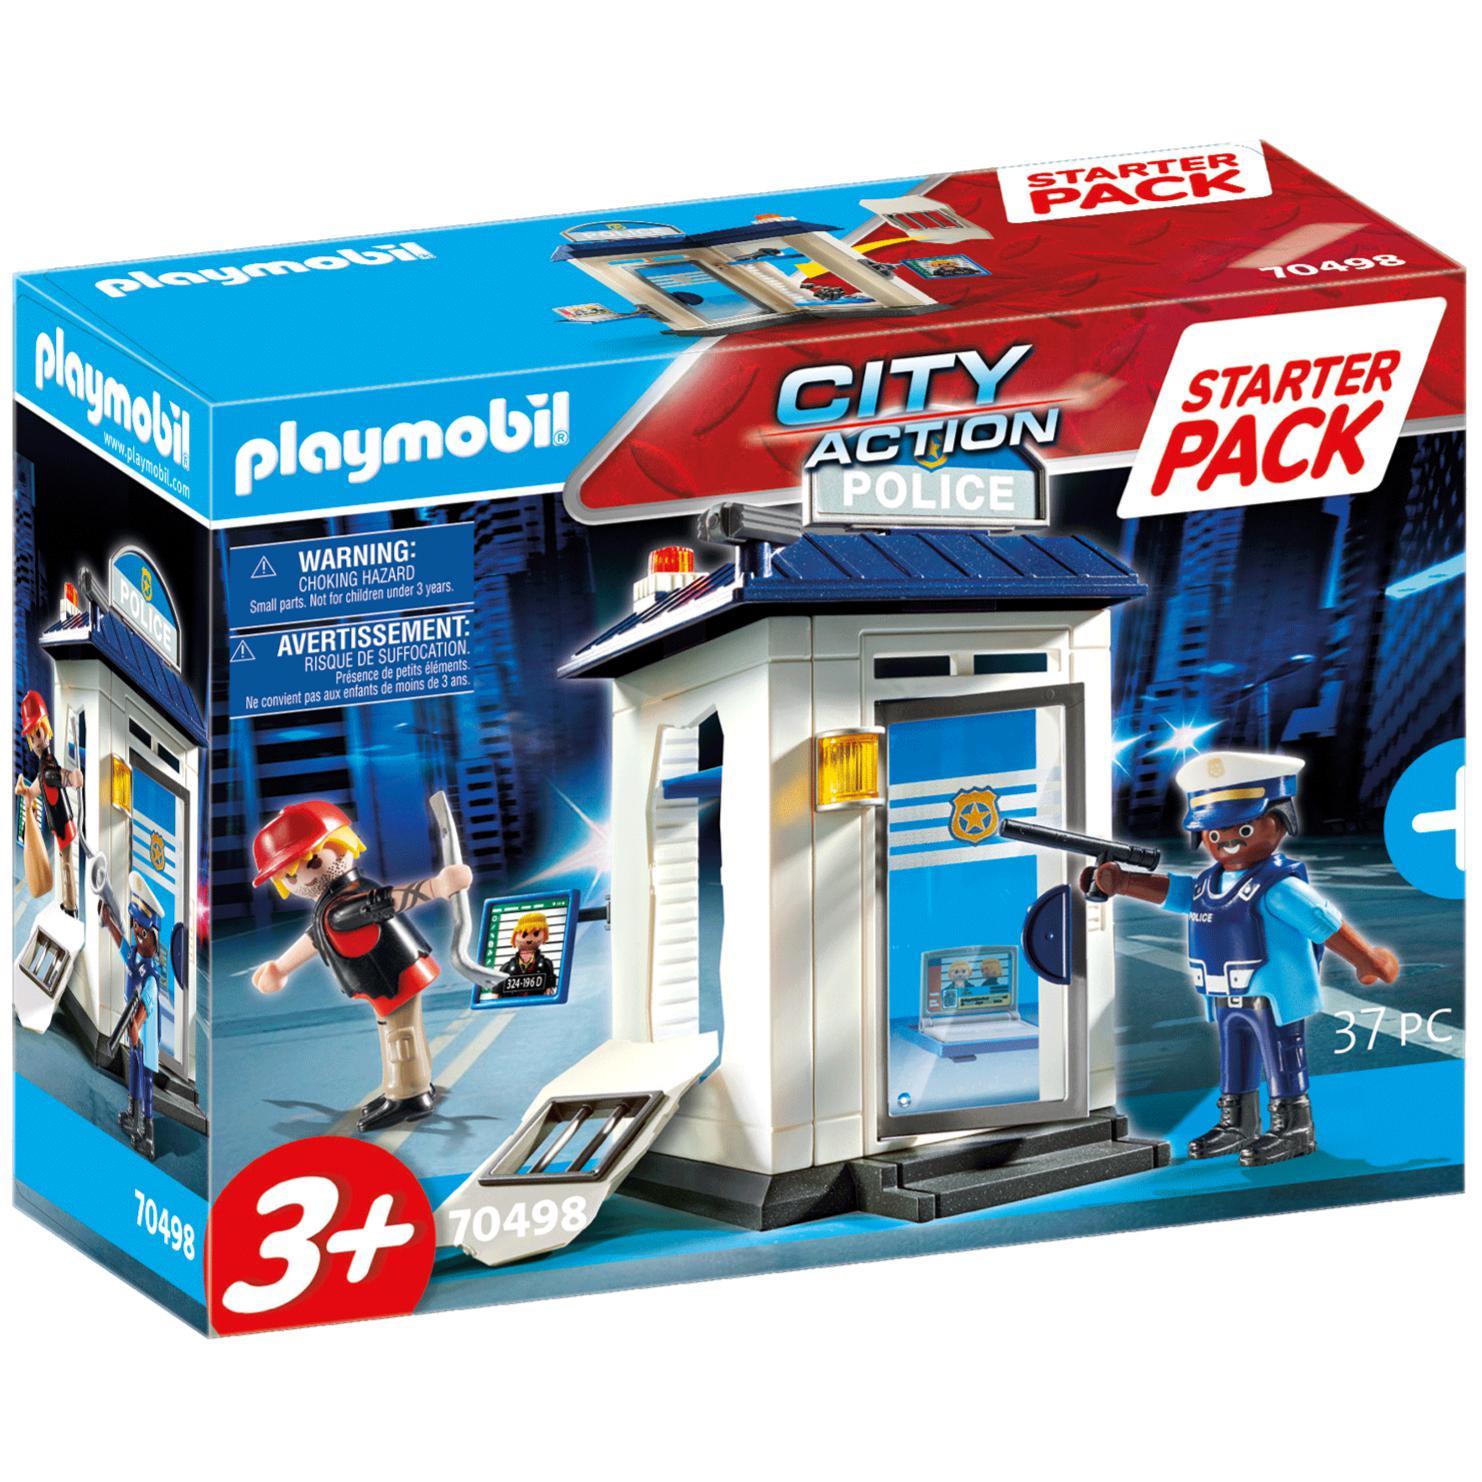 Playmobil Large Police Station Starter Pack